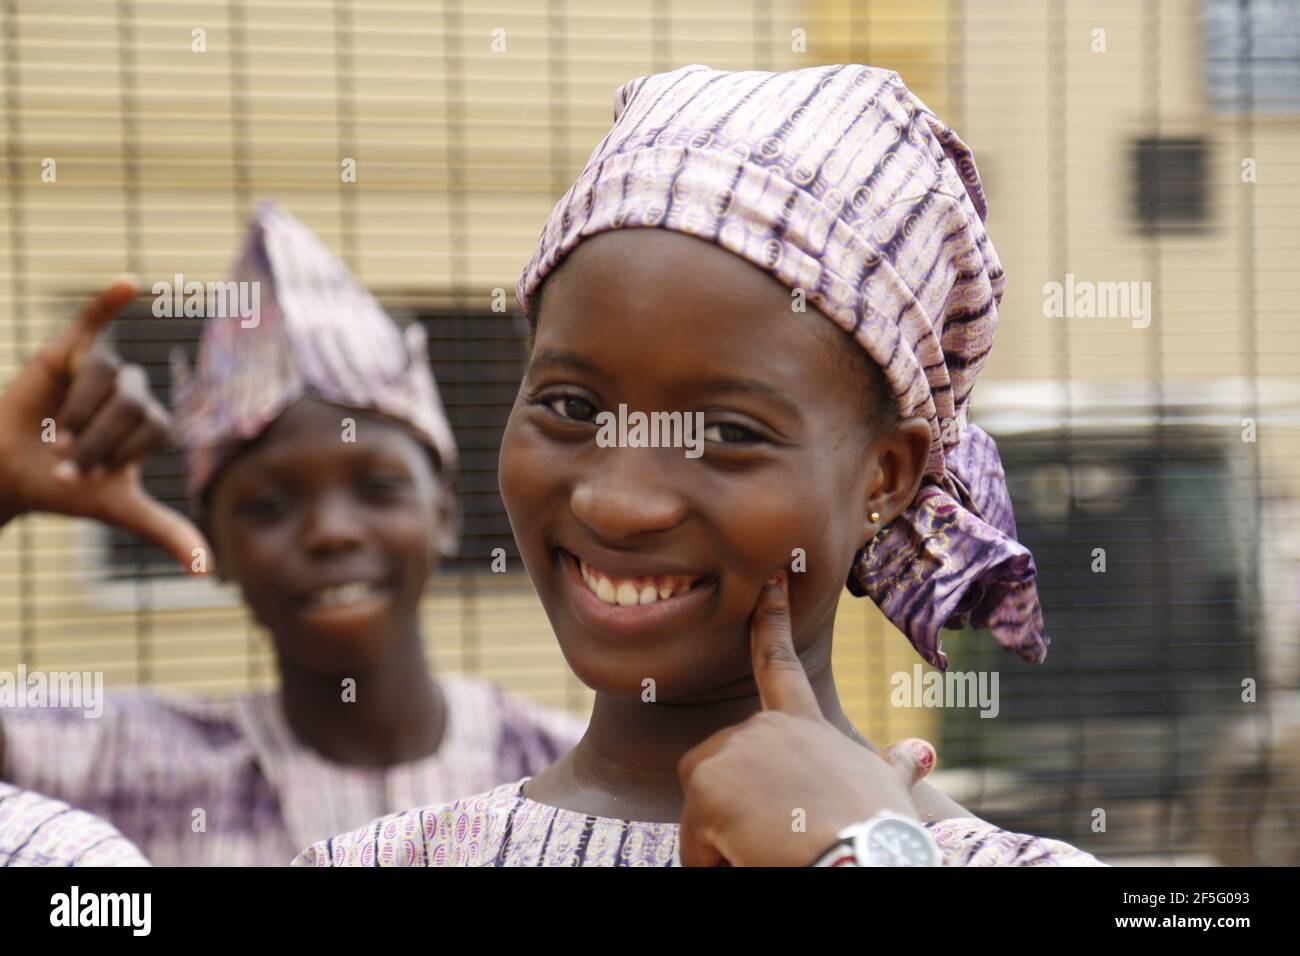 Yoruba child in traditional costume, Lagos, Nigeria. Stock Photo